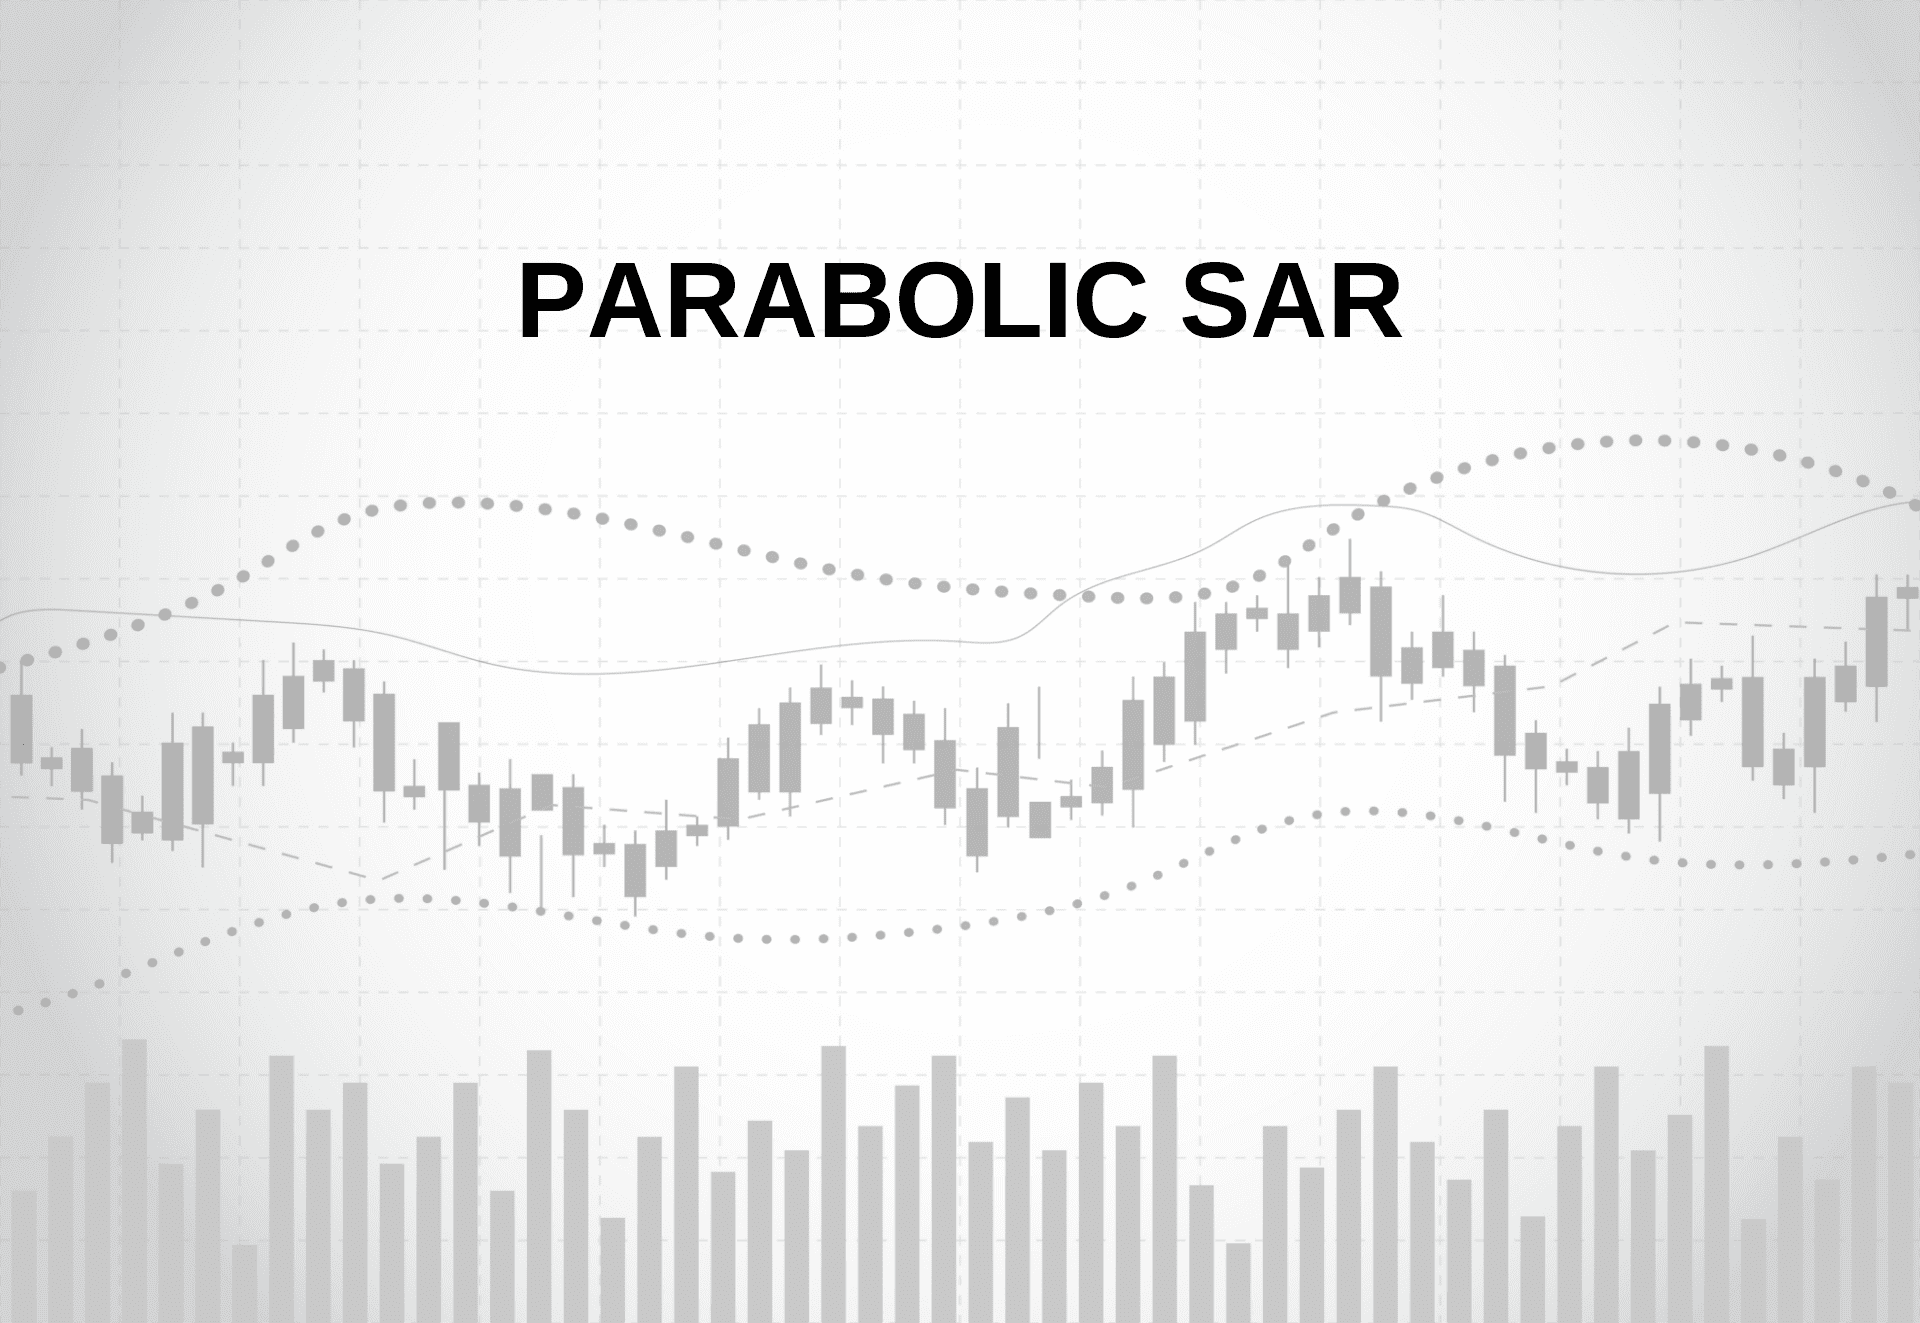 parabolic sar trading